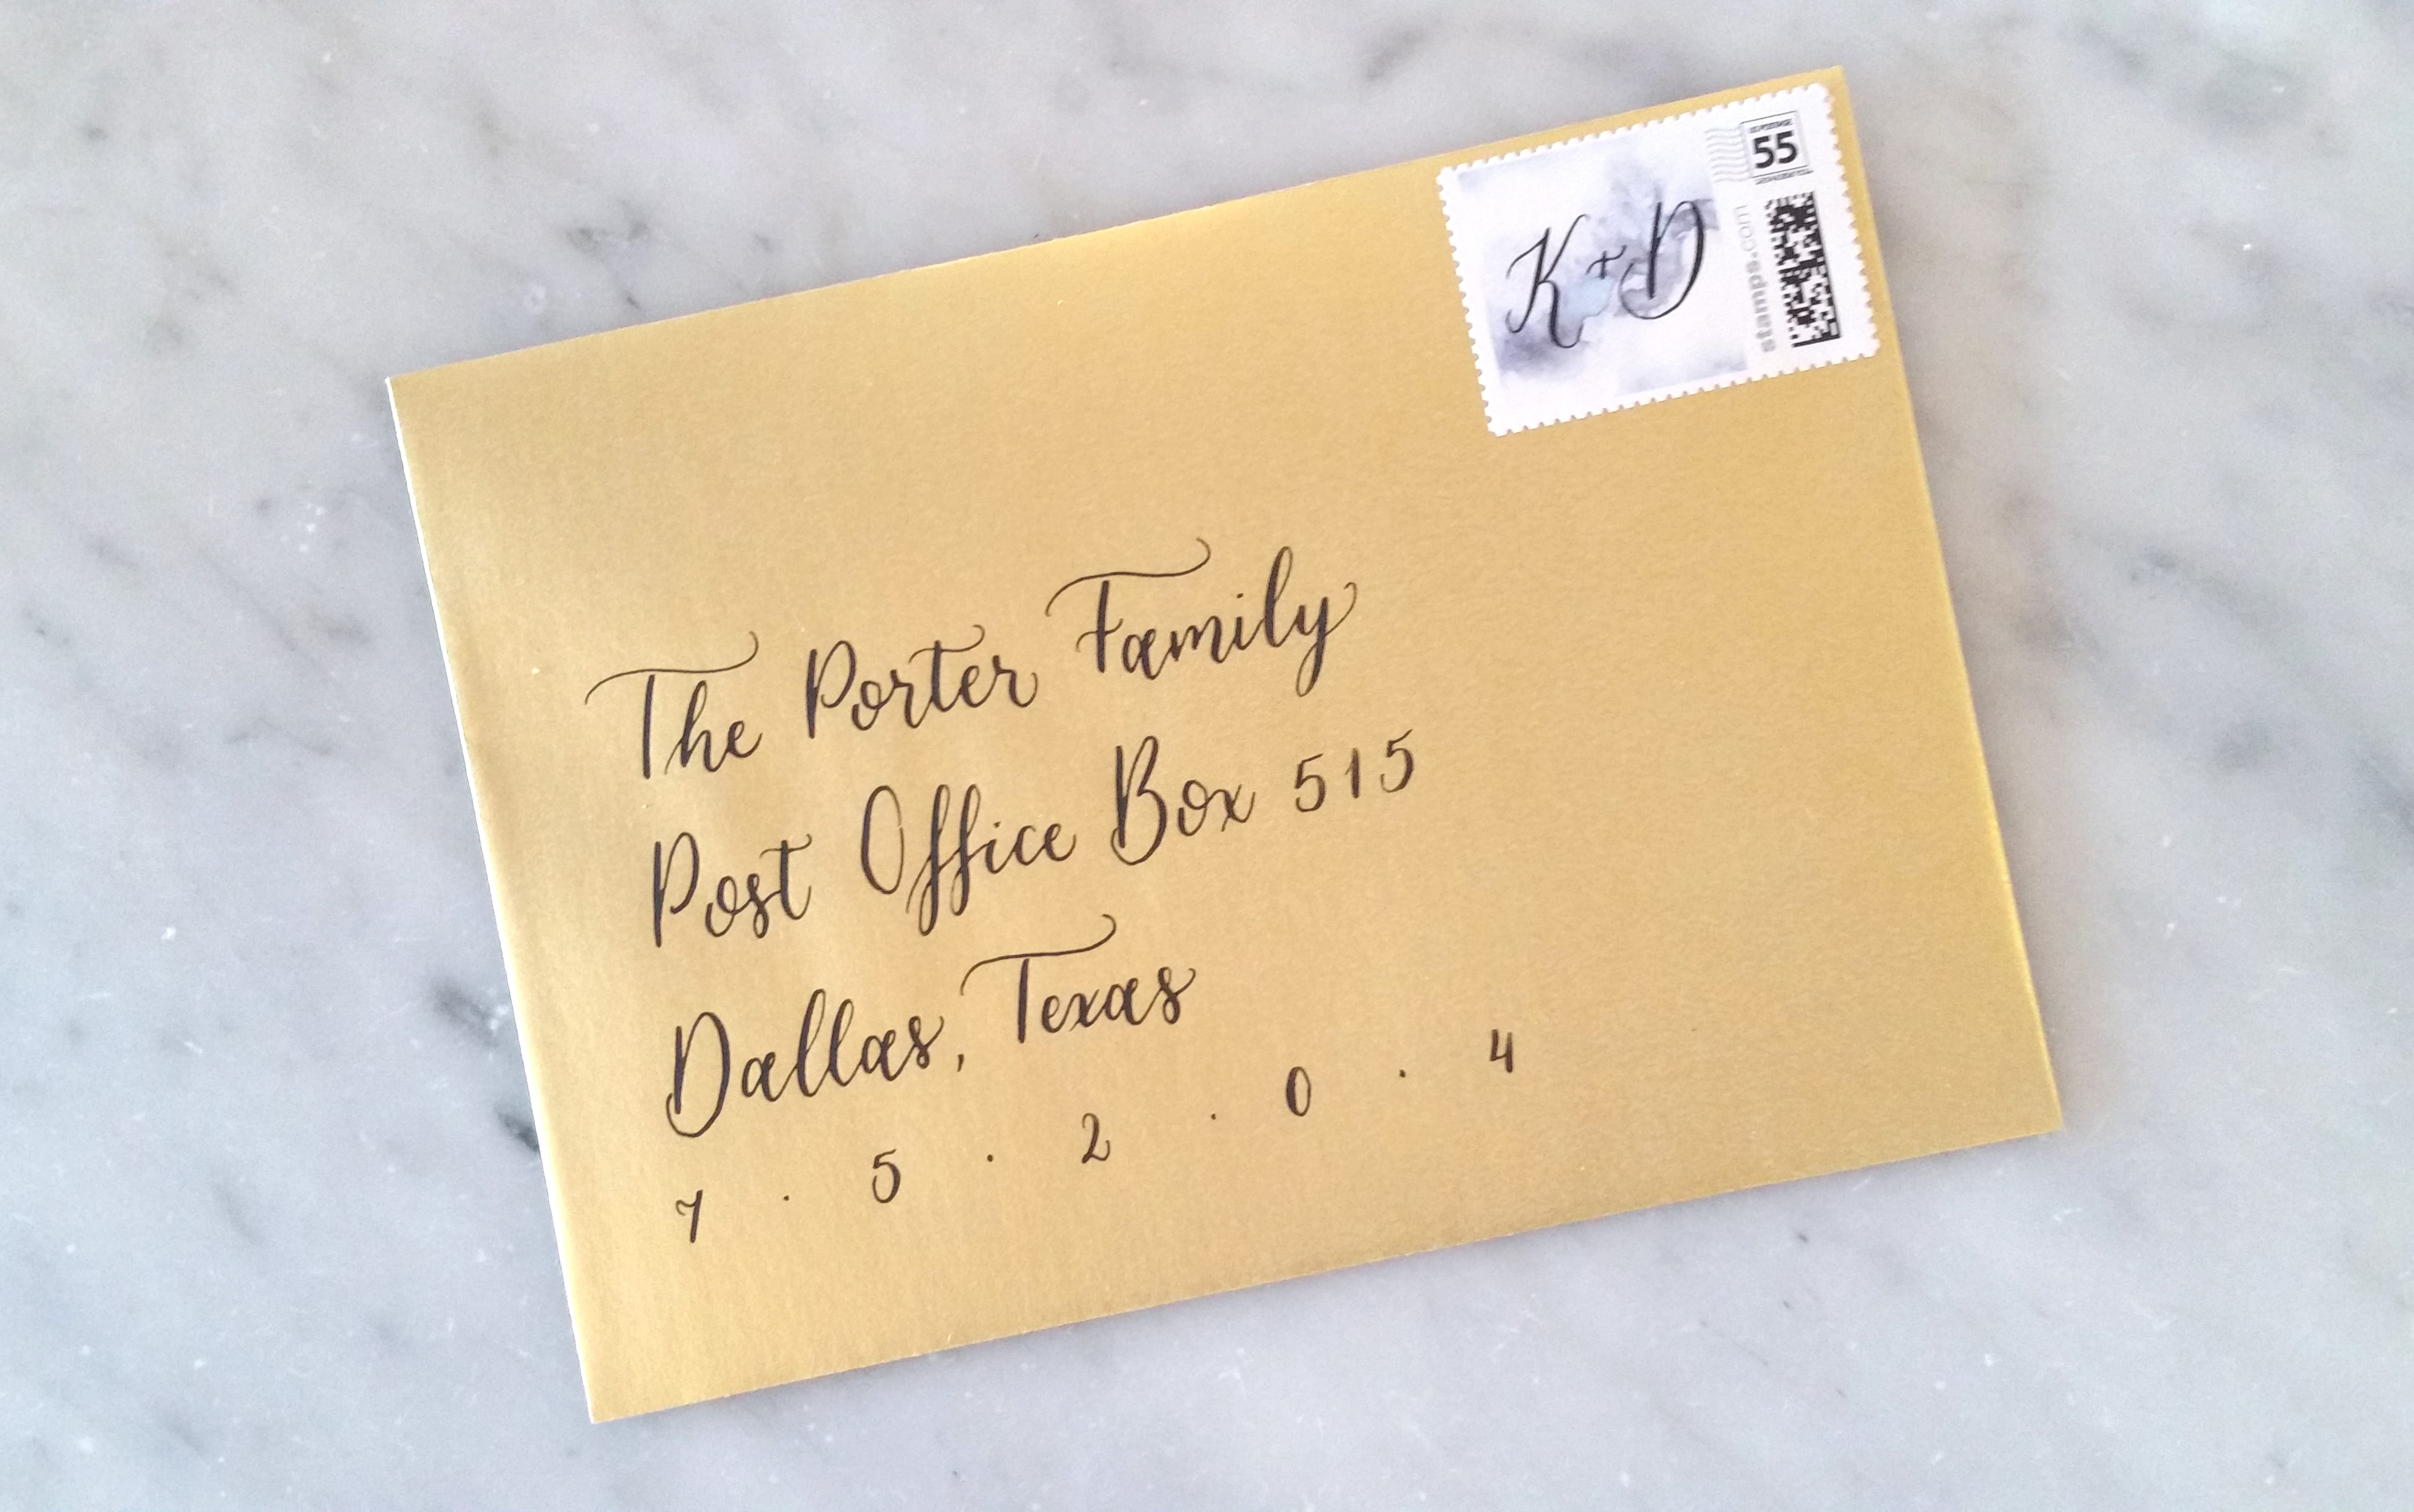 wedding etiquette 101 how to address envelopes by CalliRosa Calligrapher in San Antonio Texas